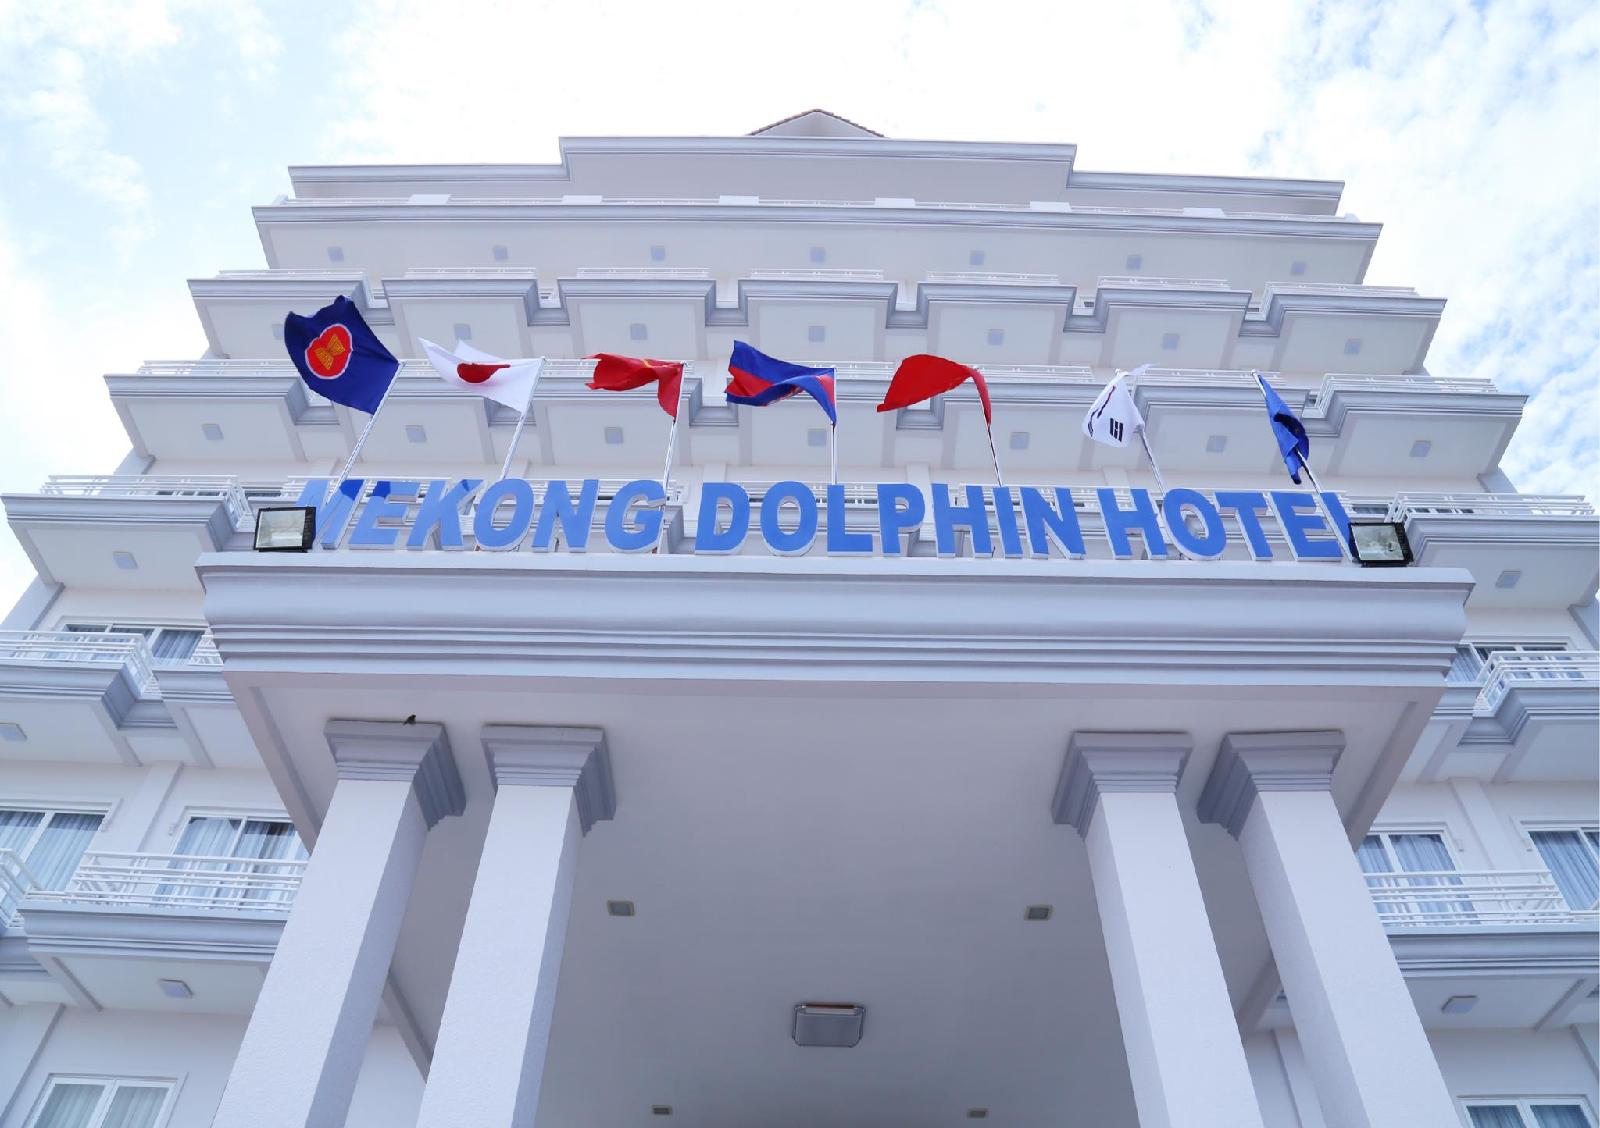 Mekong Dolphin Hotel